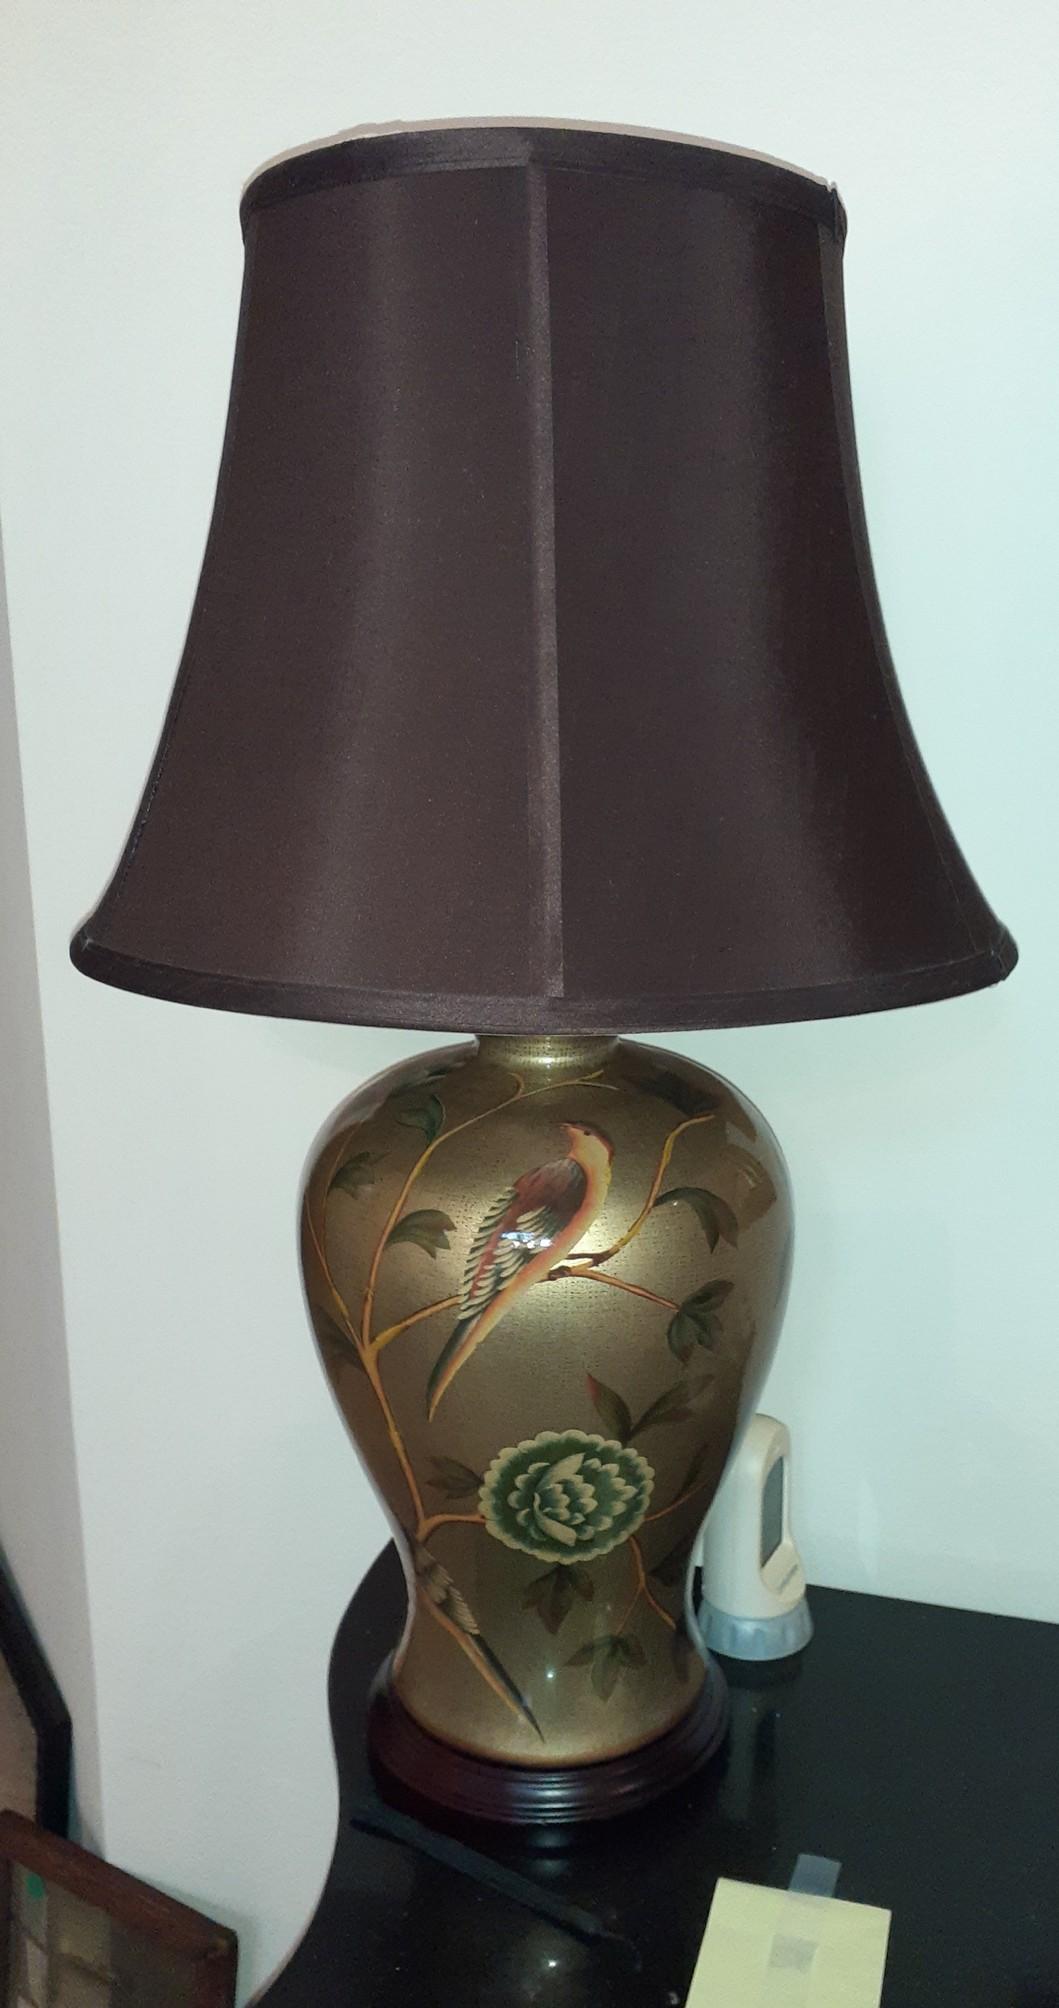 Designer Bird Lamp with Shade